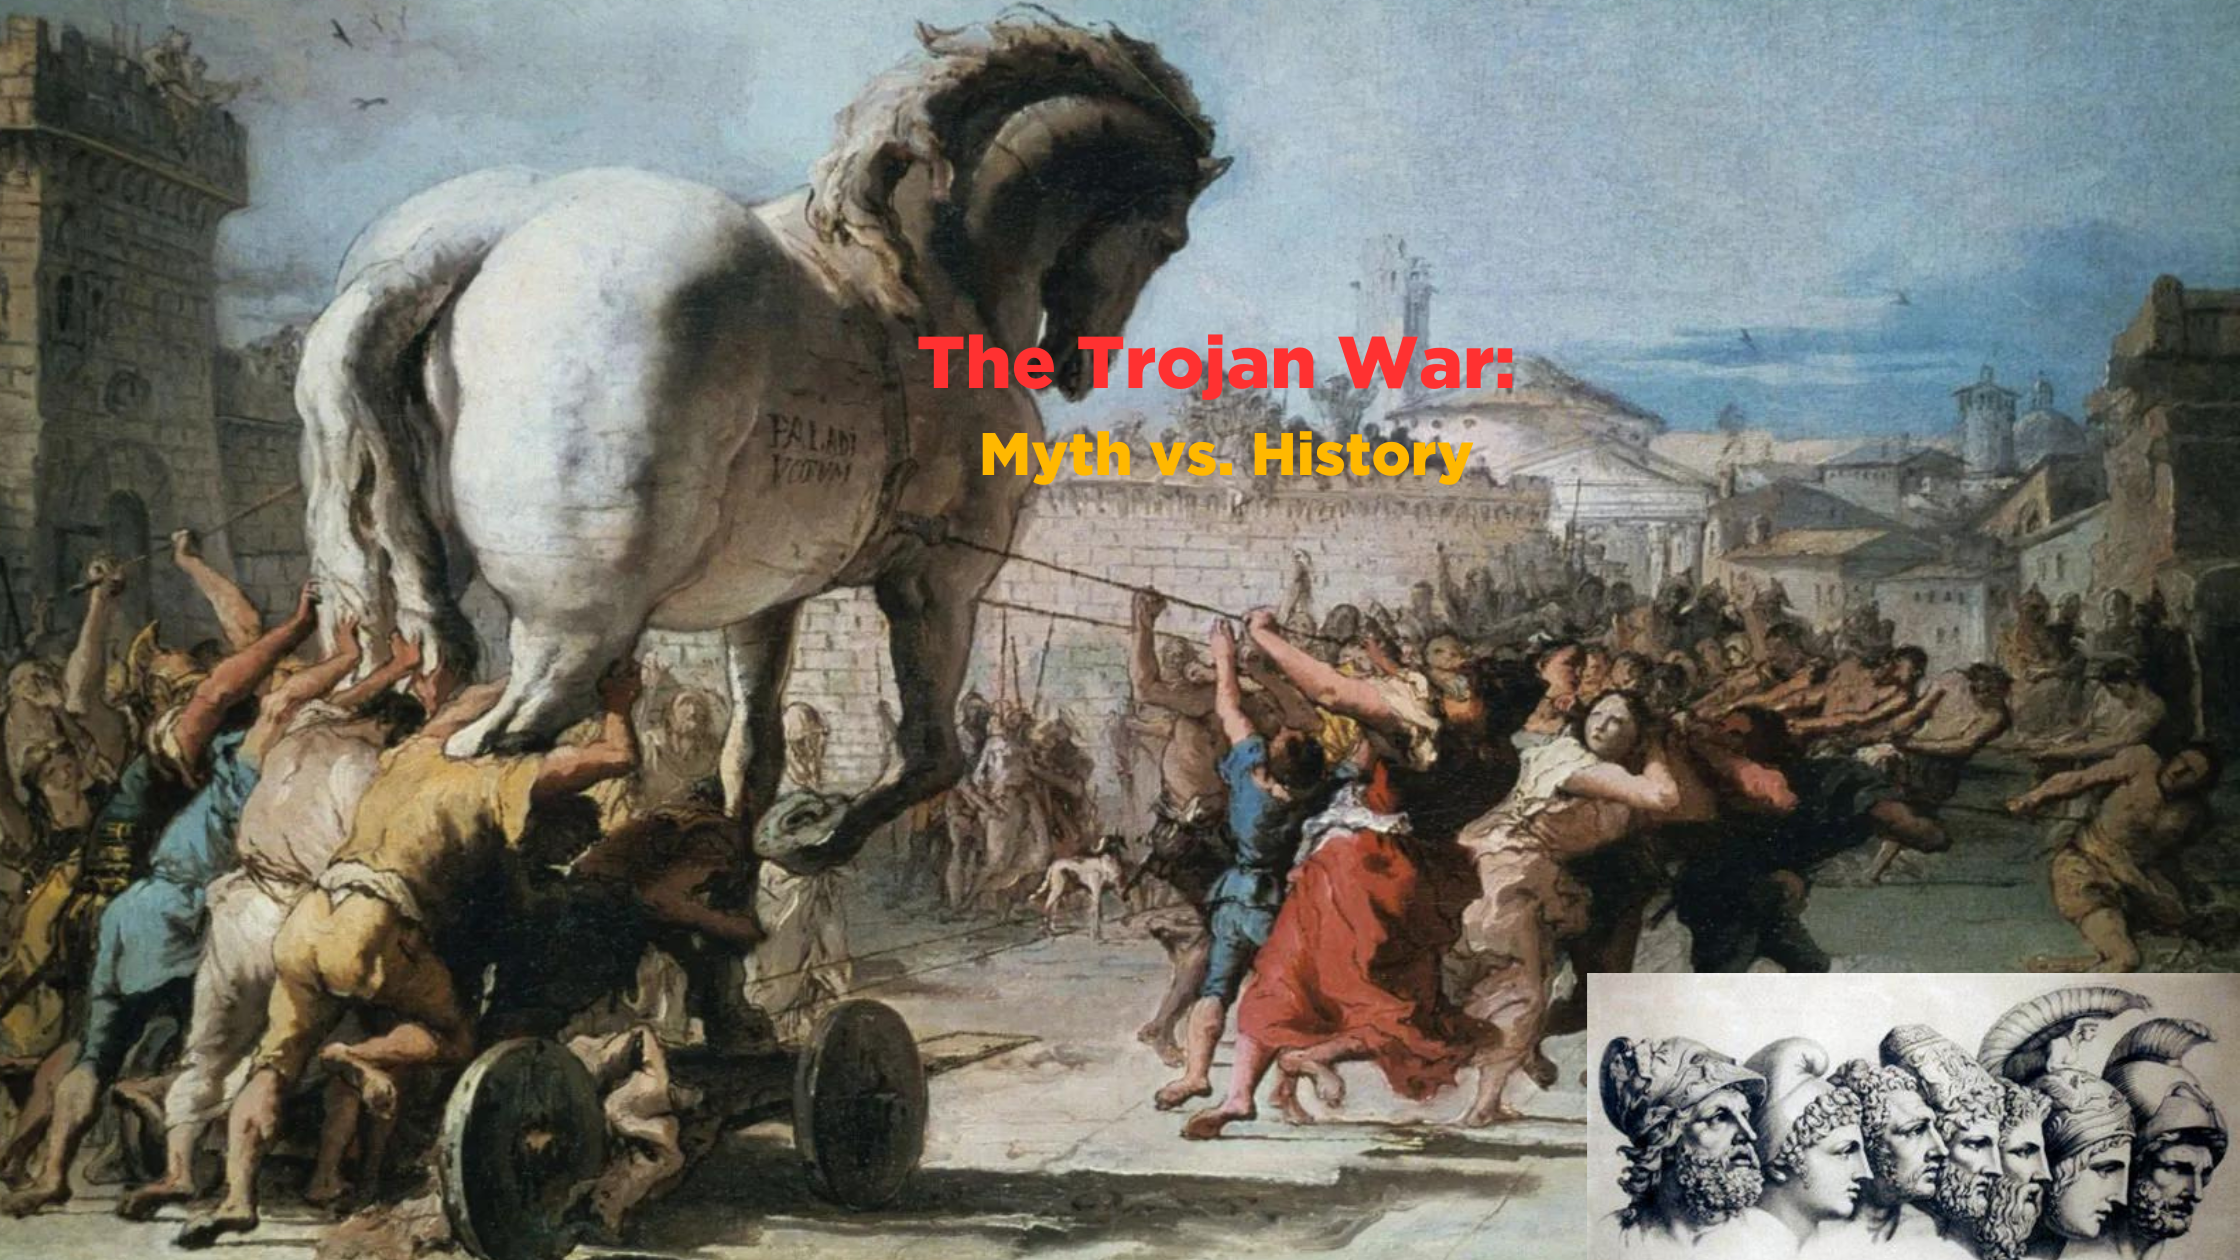 The Trojan War Myth vs. History